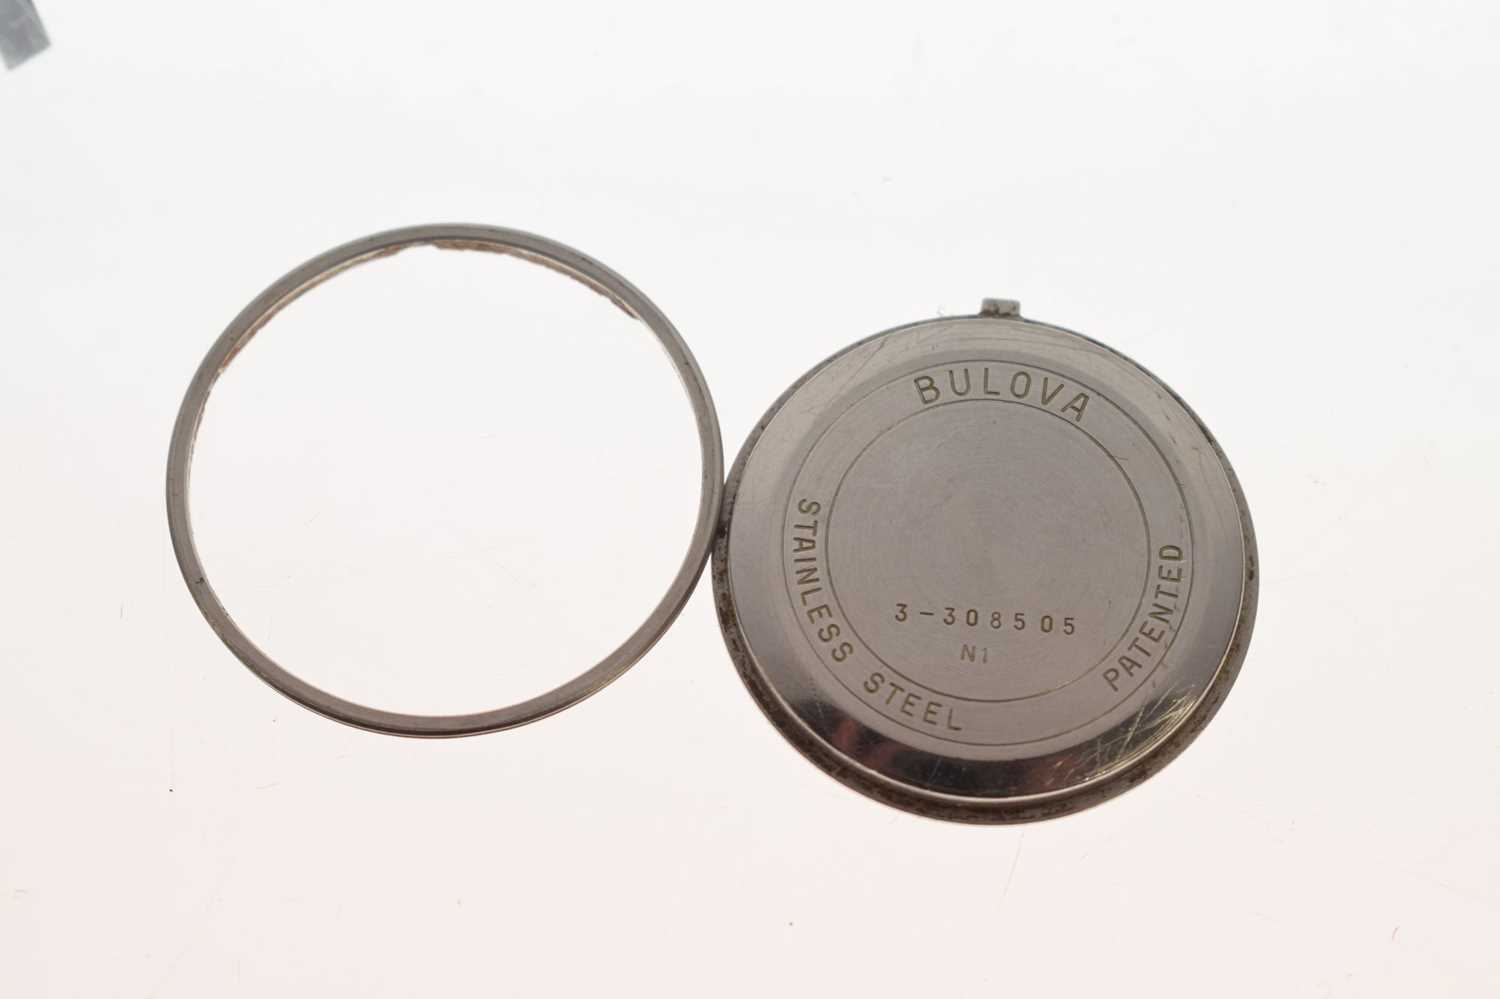 Bulova Accutron - Gentleman's 1970s stainless steel bracelet watch - Image 8 of 9